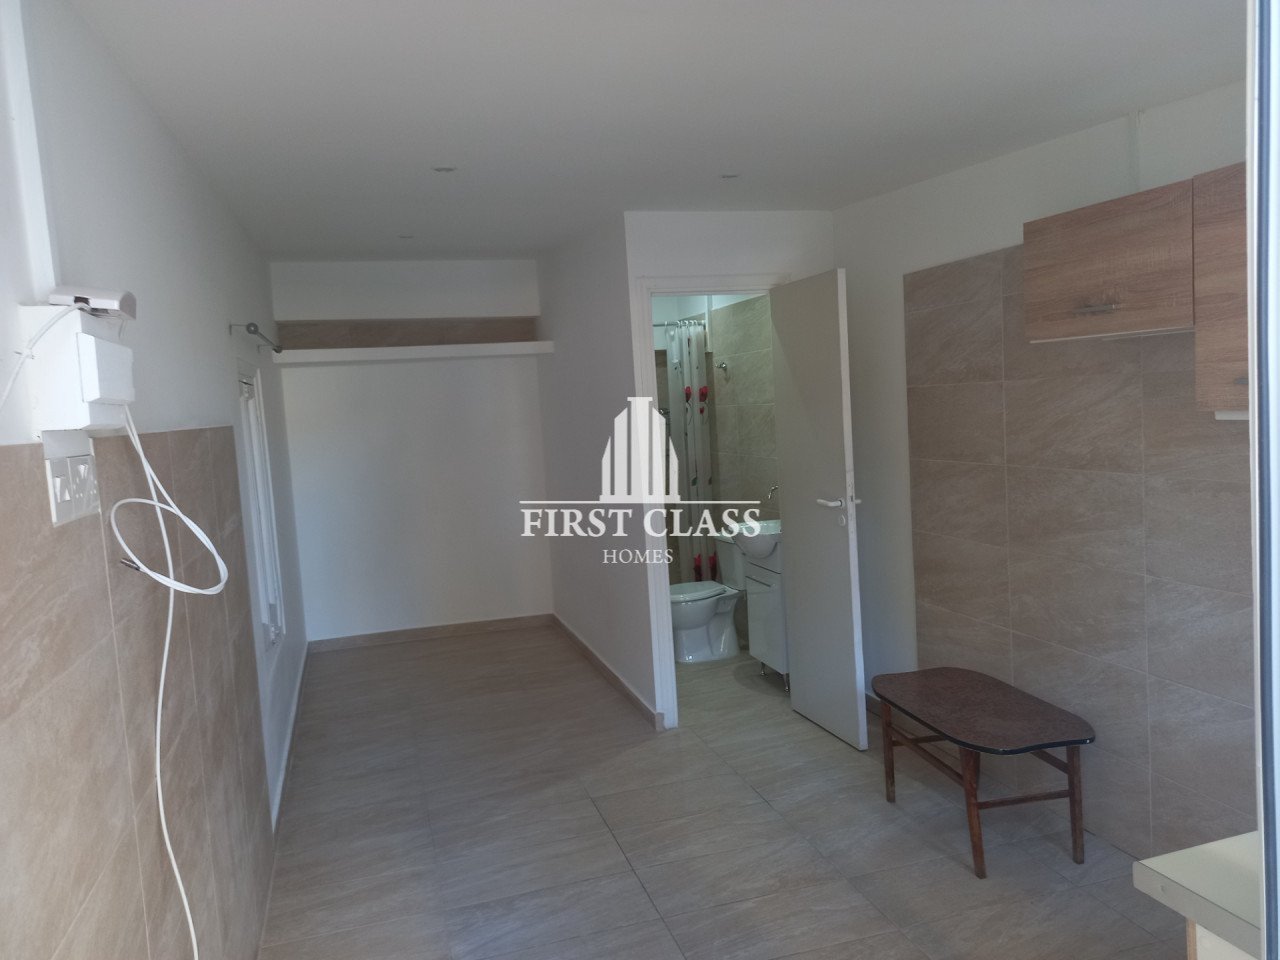 Property for Rent: Apartment (Studio) in Engomi, Nicosia for Rent | Key Realtor Cyprus